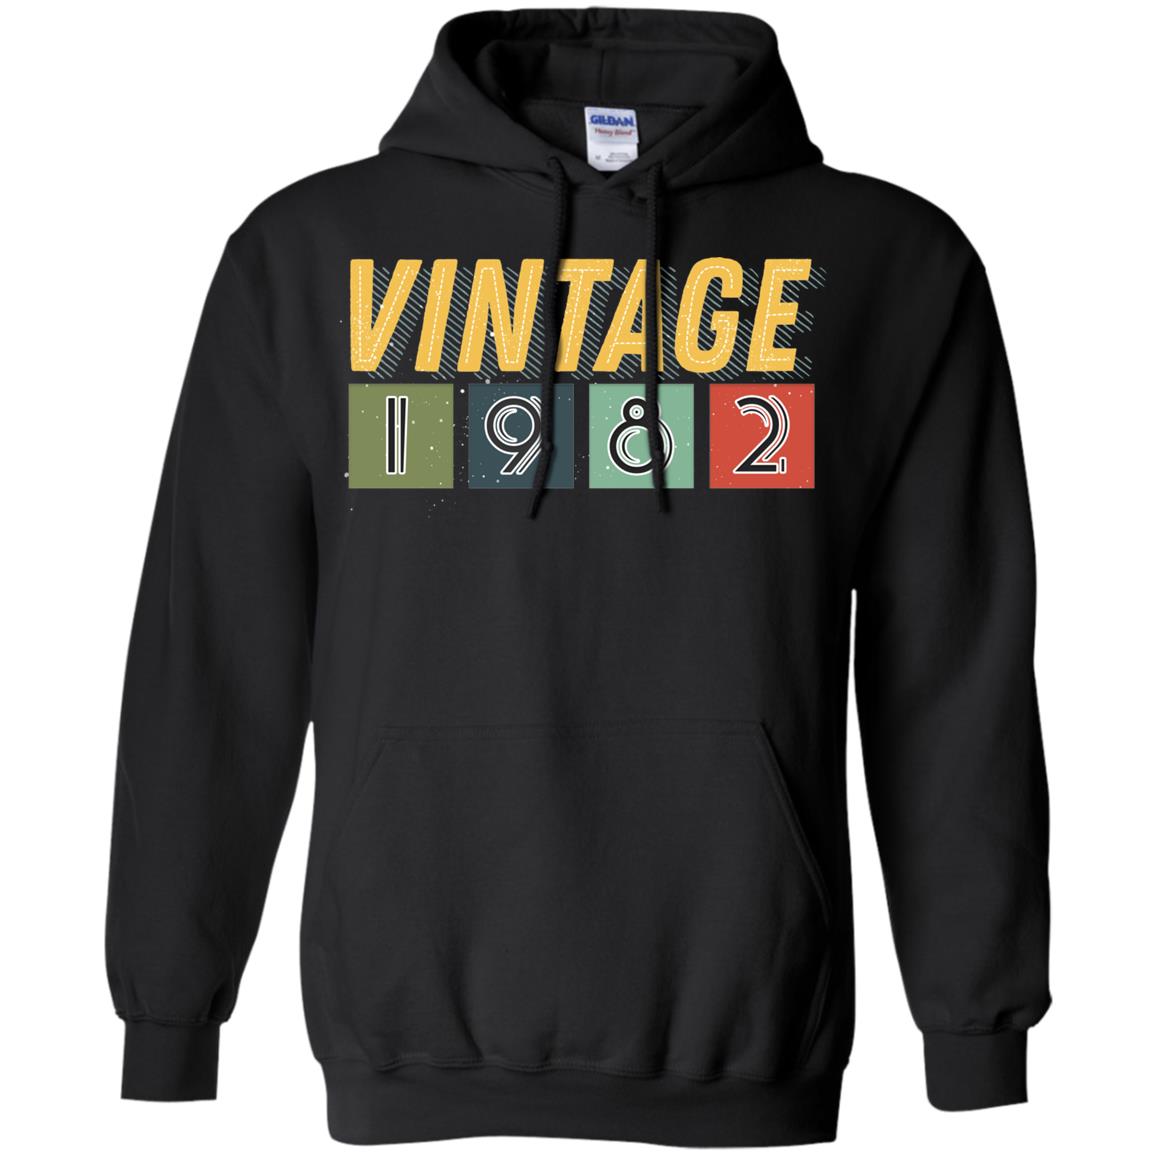 Vintage 1982 36th Birthday Gift Shirt For Mens Or WomensG185 Gildan Pullover Hoodie 8 oz.